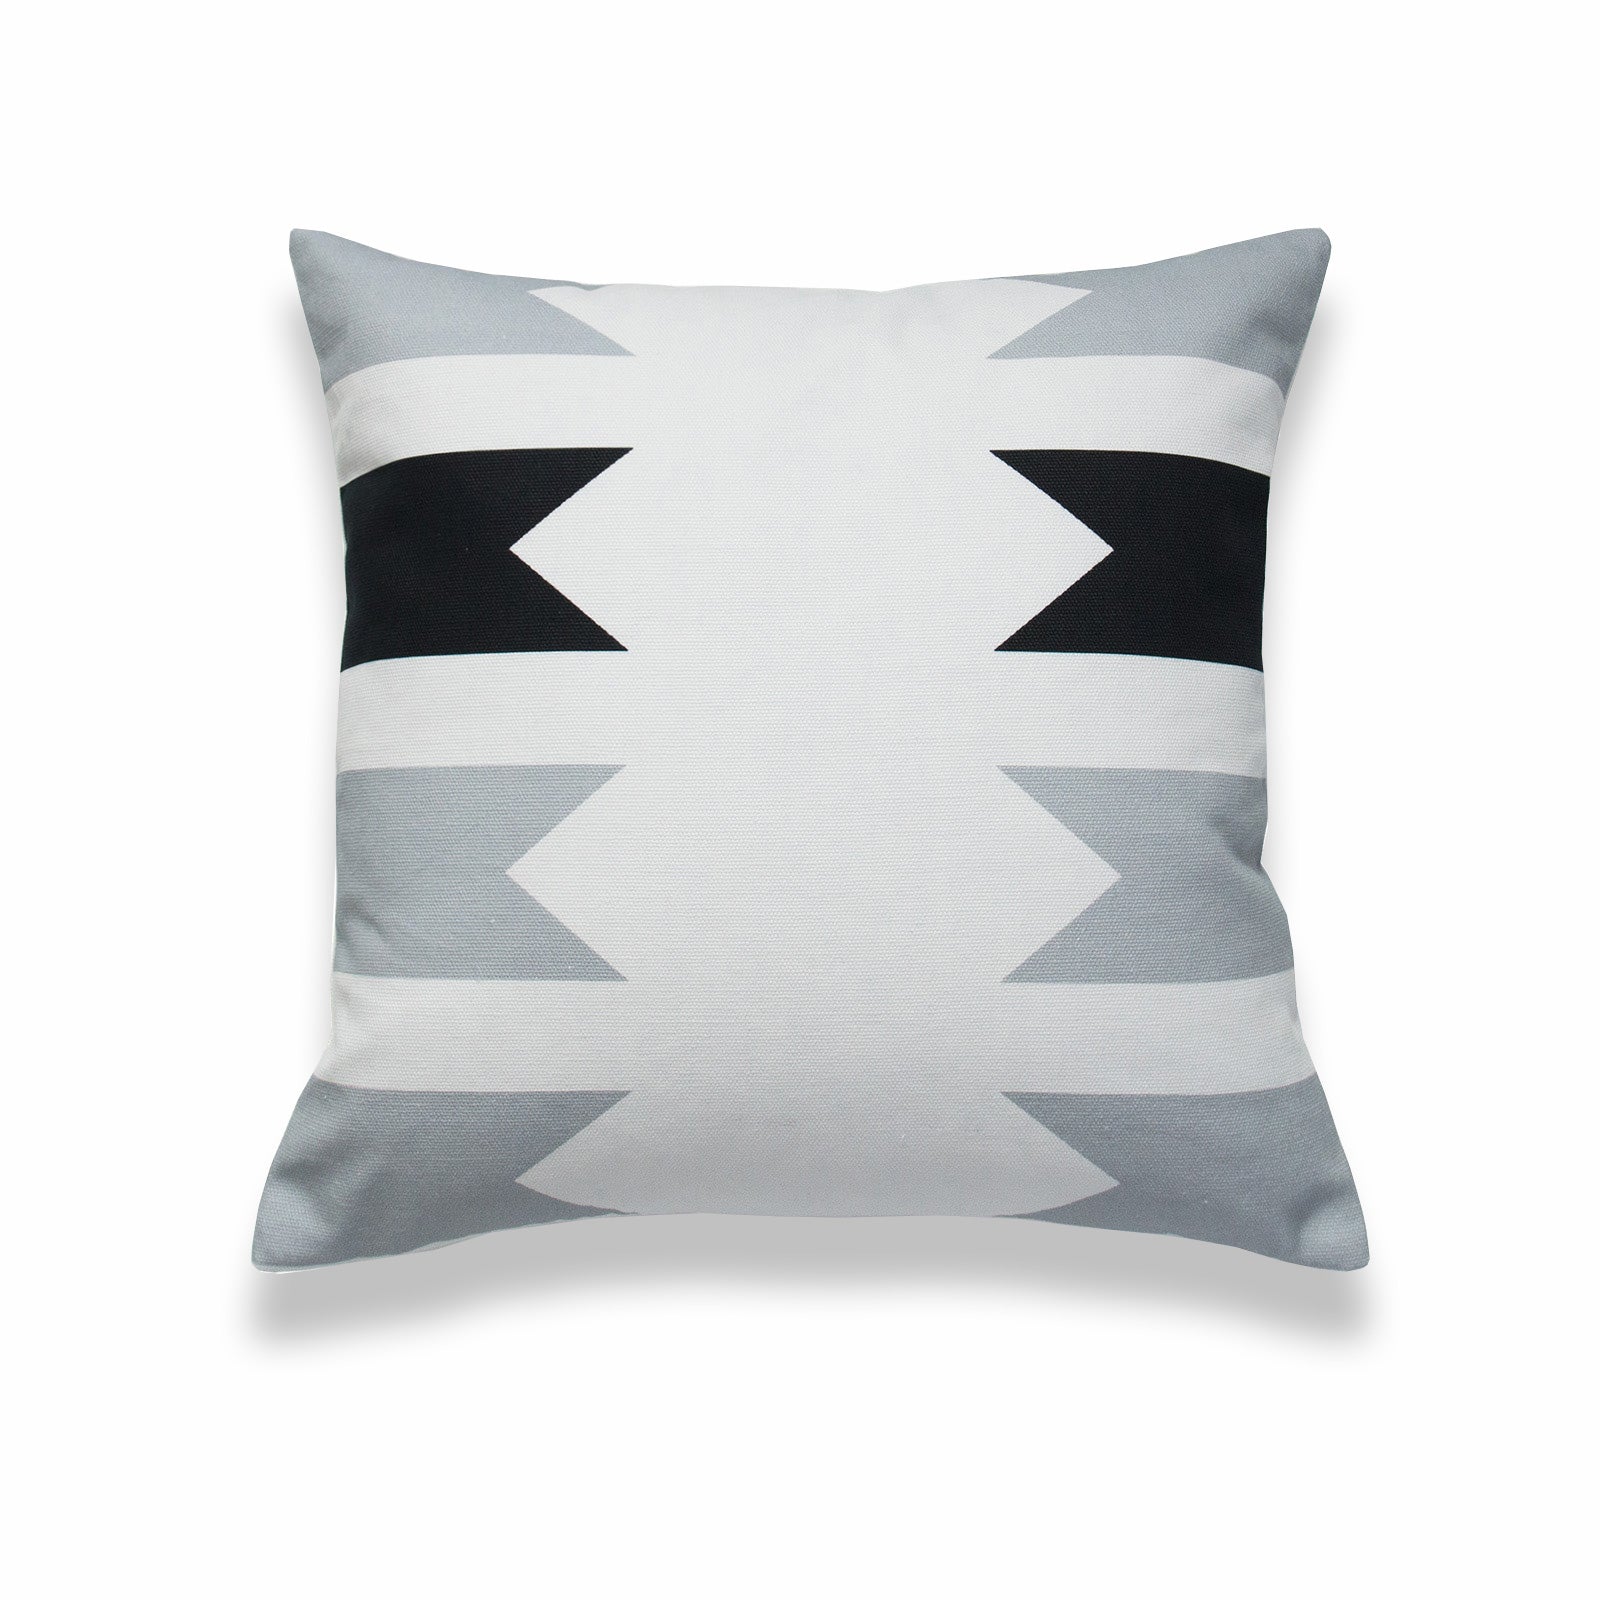 Aztec Print Pillow Cover, Geometric, Black White Gray, 18"x18"